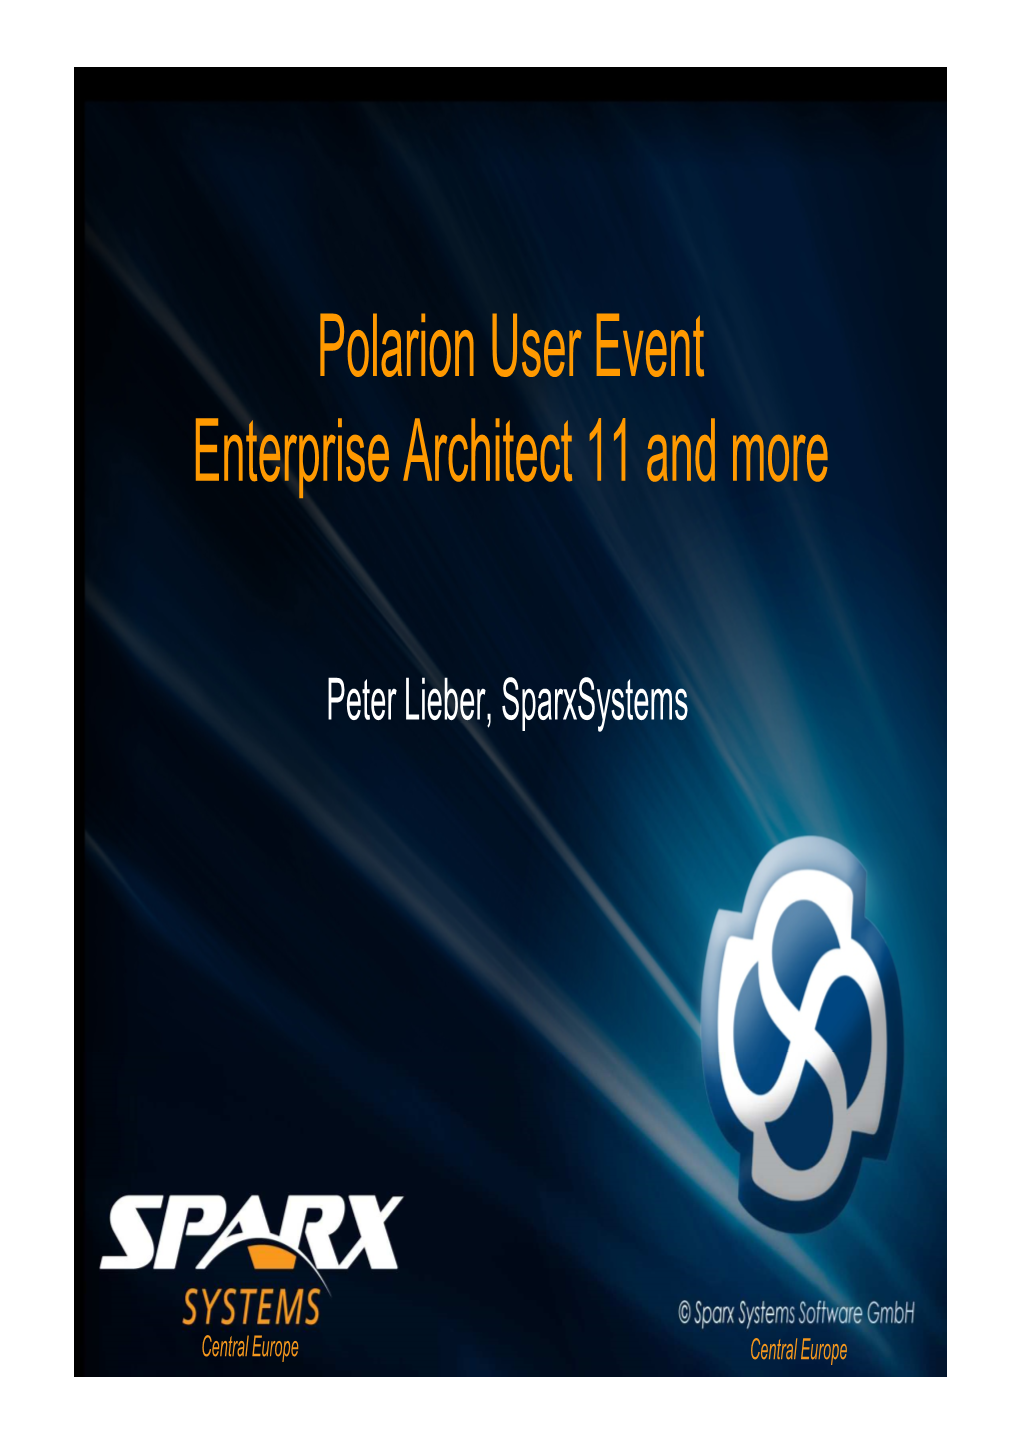 Peter Lieber, Sparx Systems